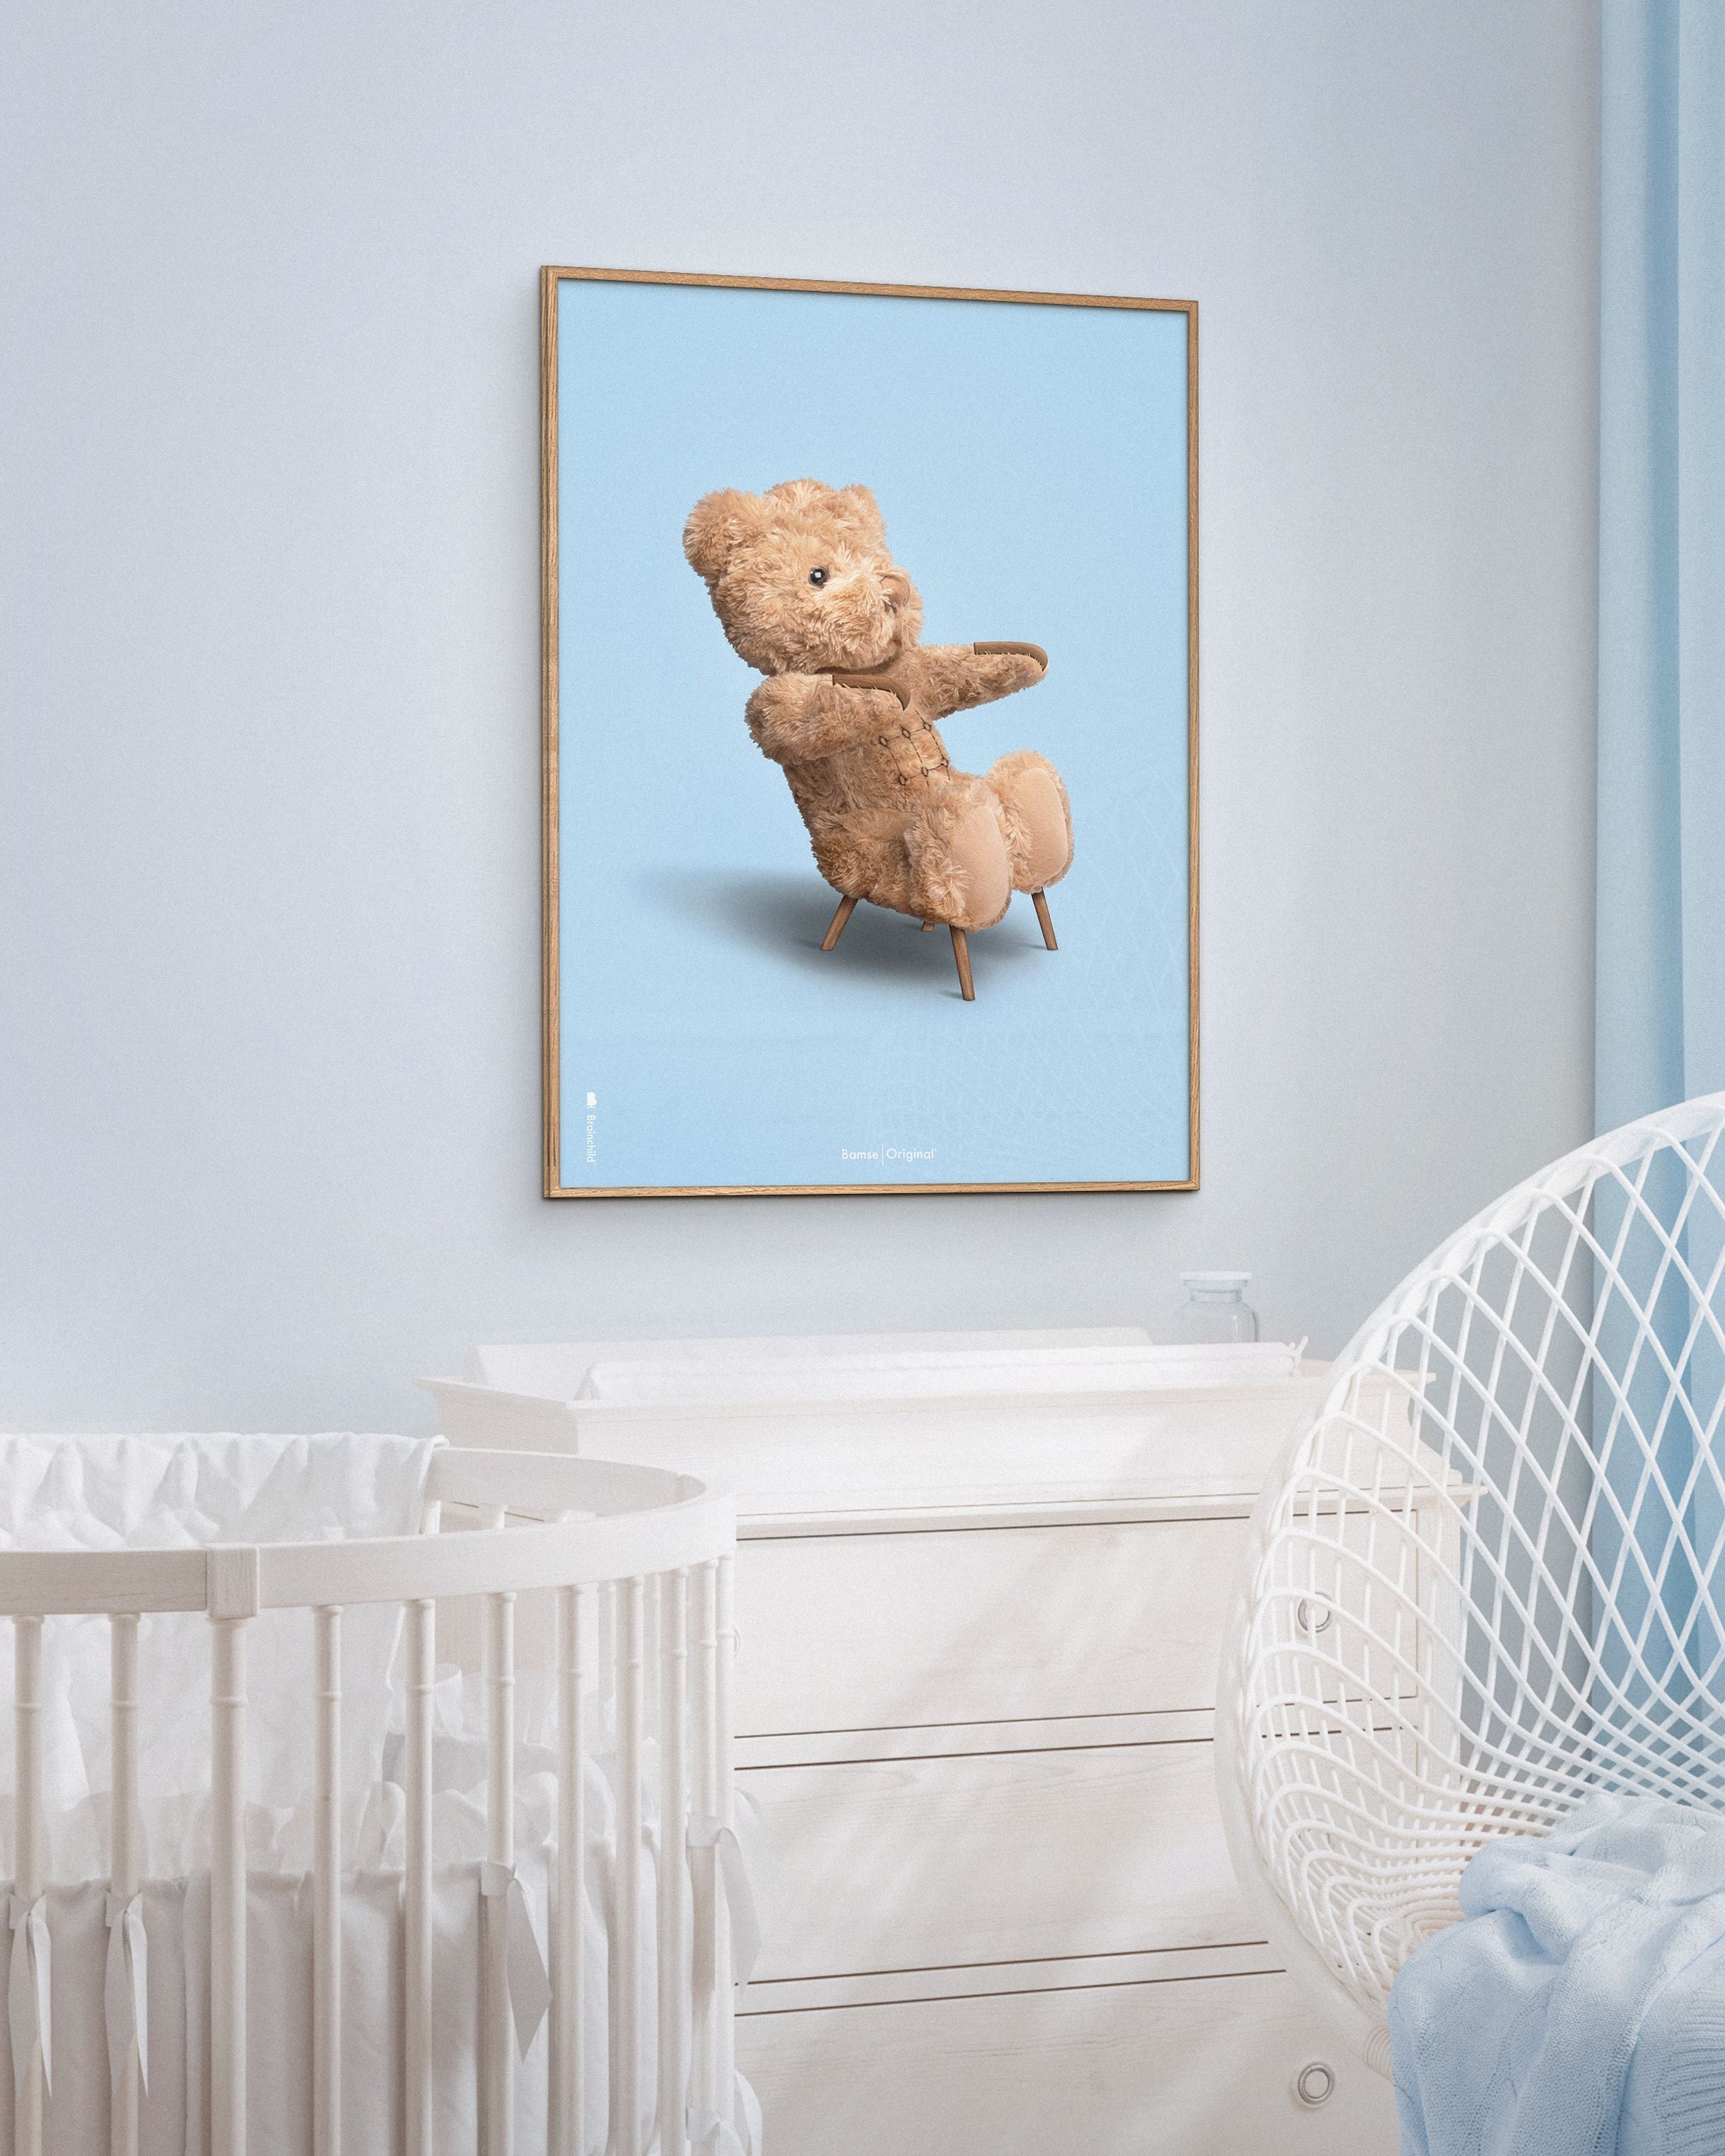 Brainchild Teddy Bear Classic Poster Brass Colored Frame 50x70 Cm, Light Blue Background